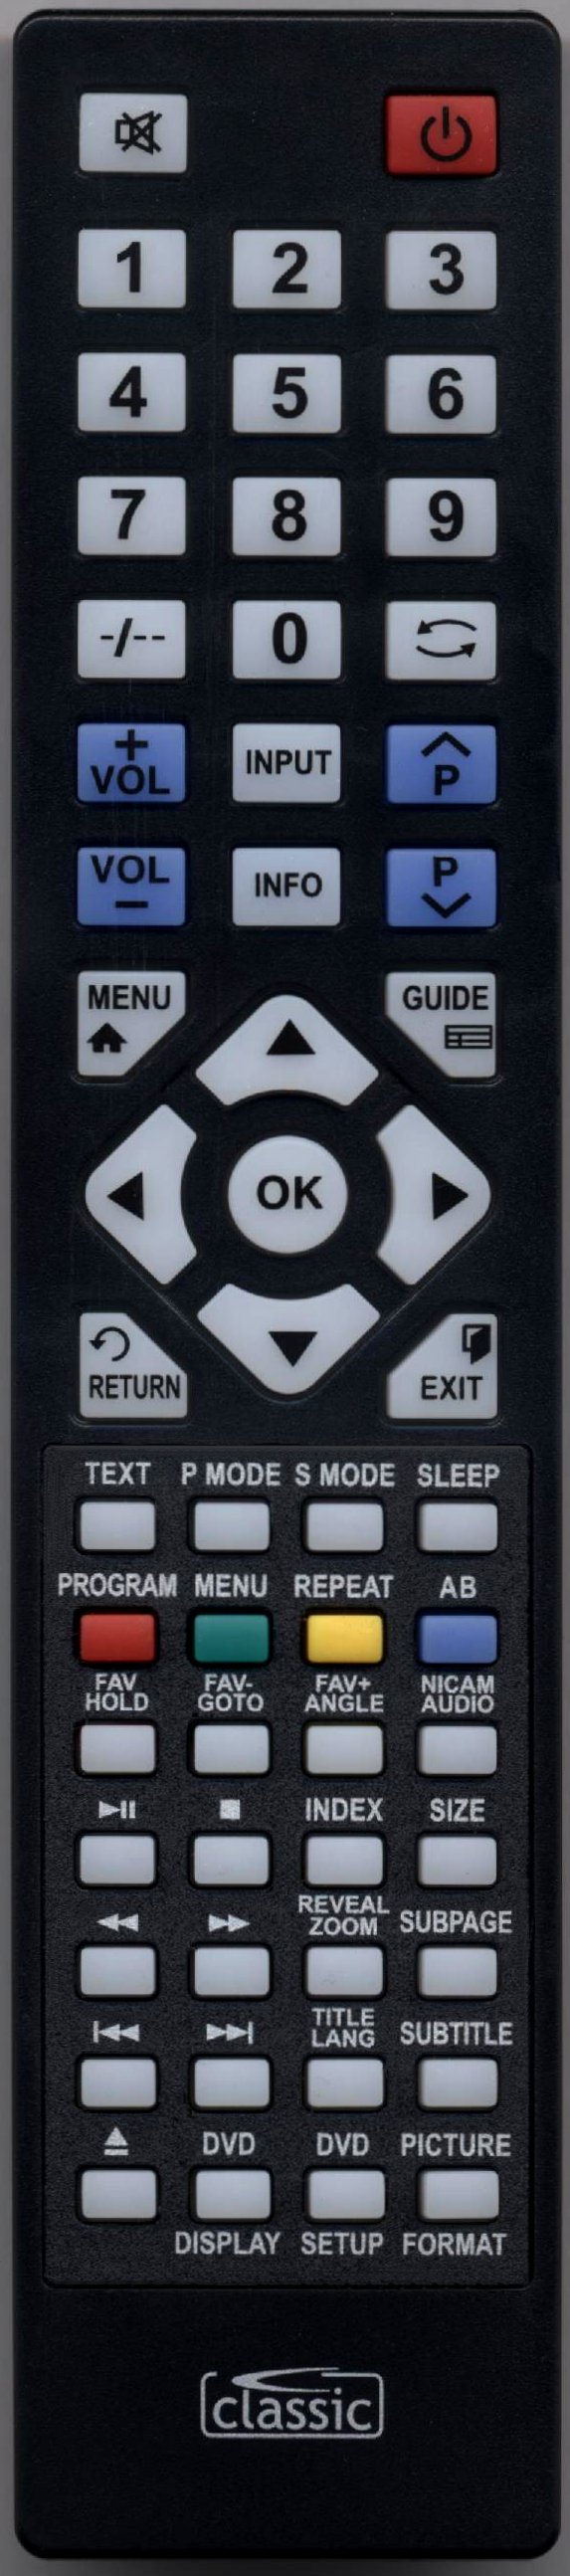 UMC - X21684 (Inc DVD) Alternative Remote Control